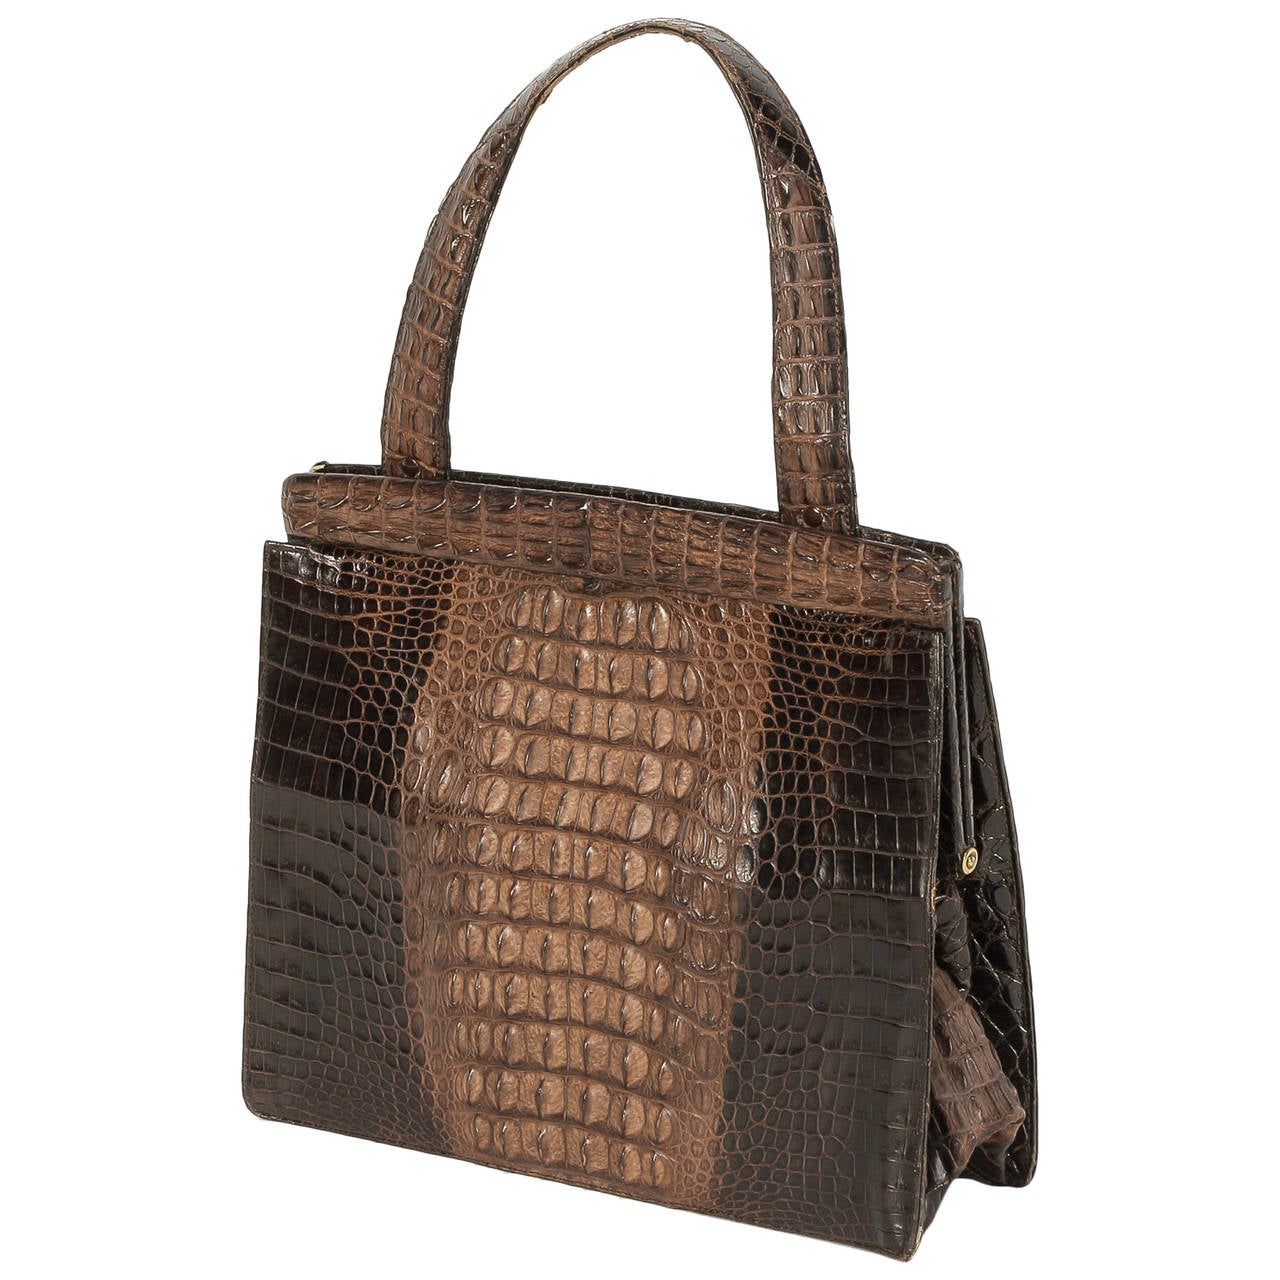 Real Alligator Leather Handbag Purse, 1940s For Sale at 1stdibs